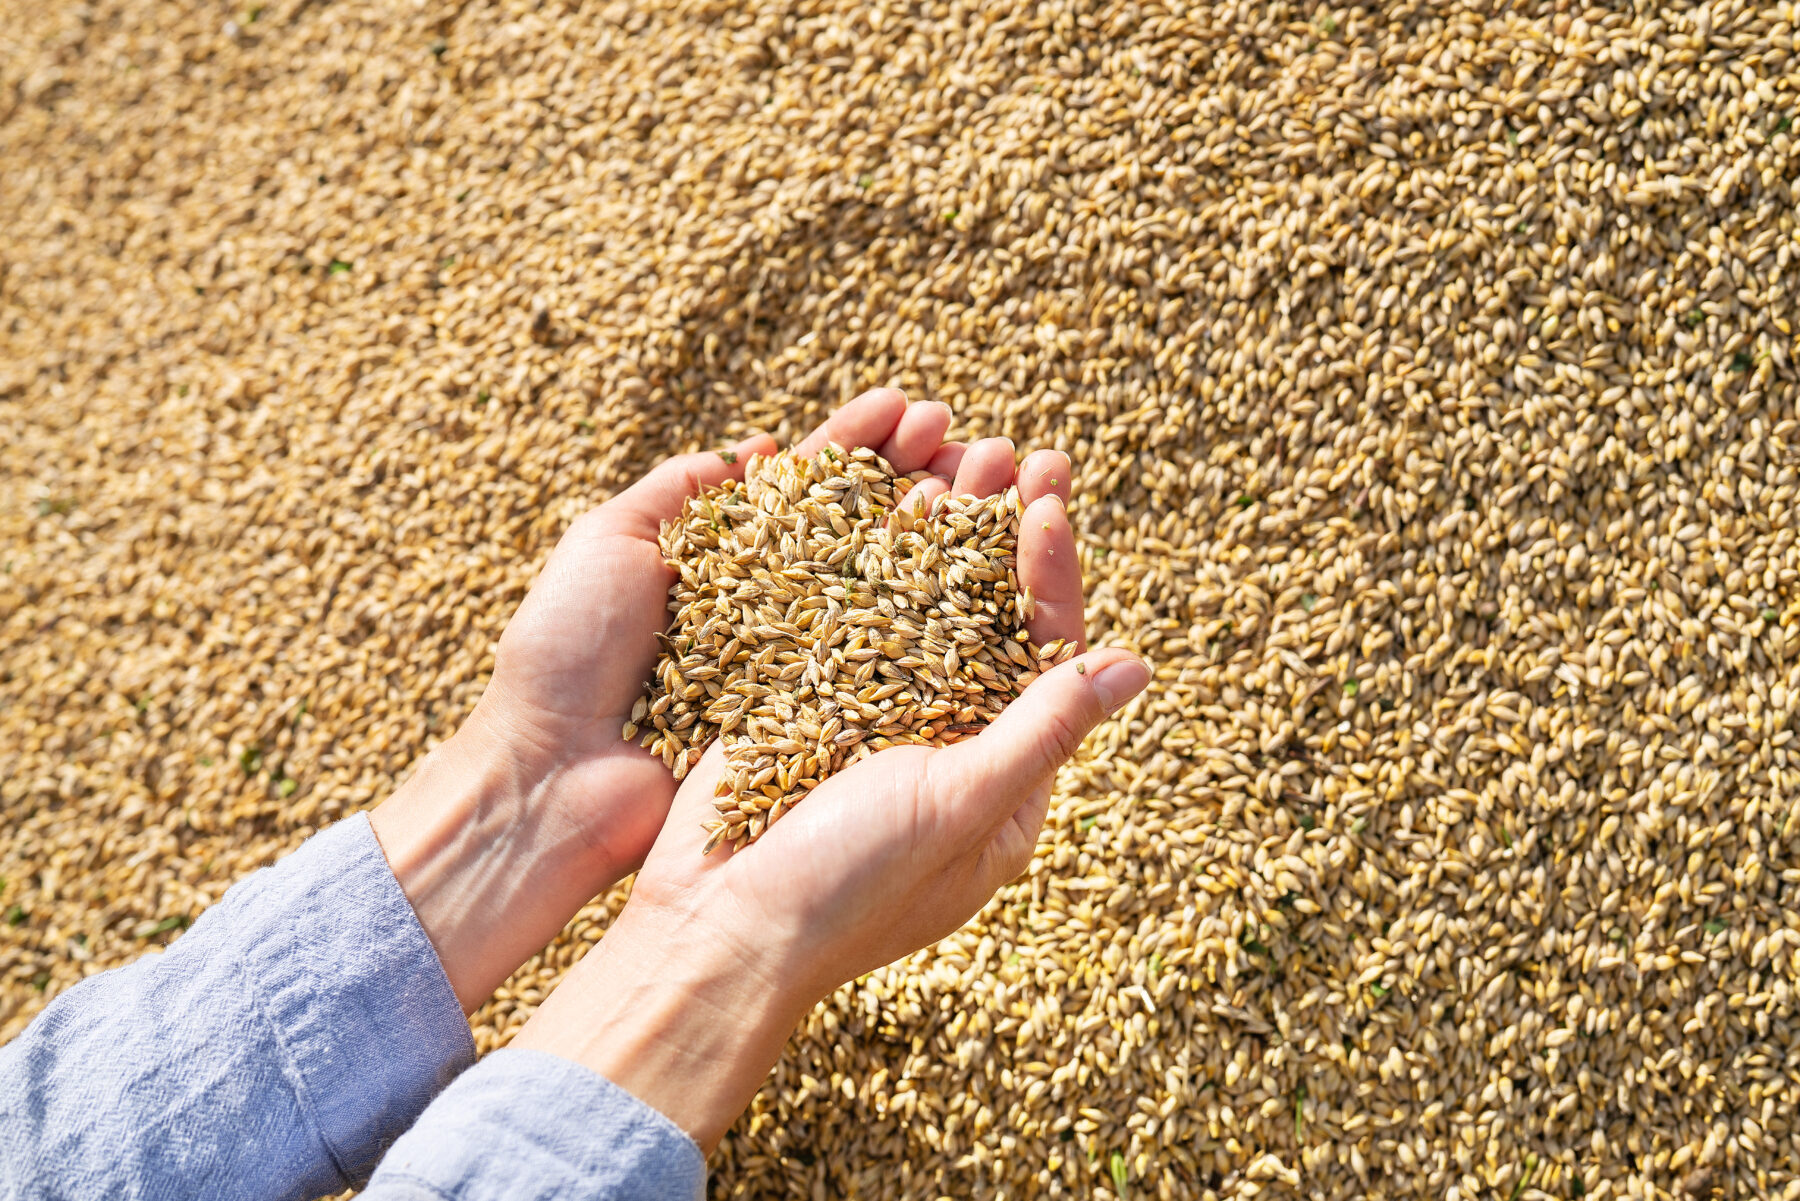 Farmer checks the quality of barley grain after harvest